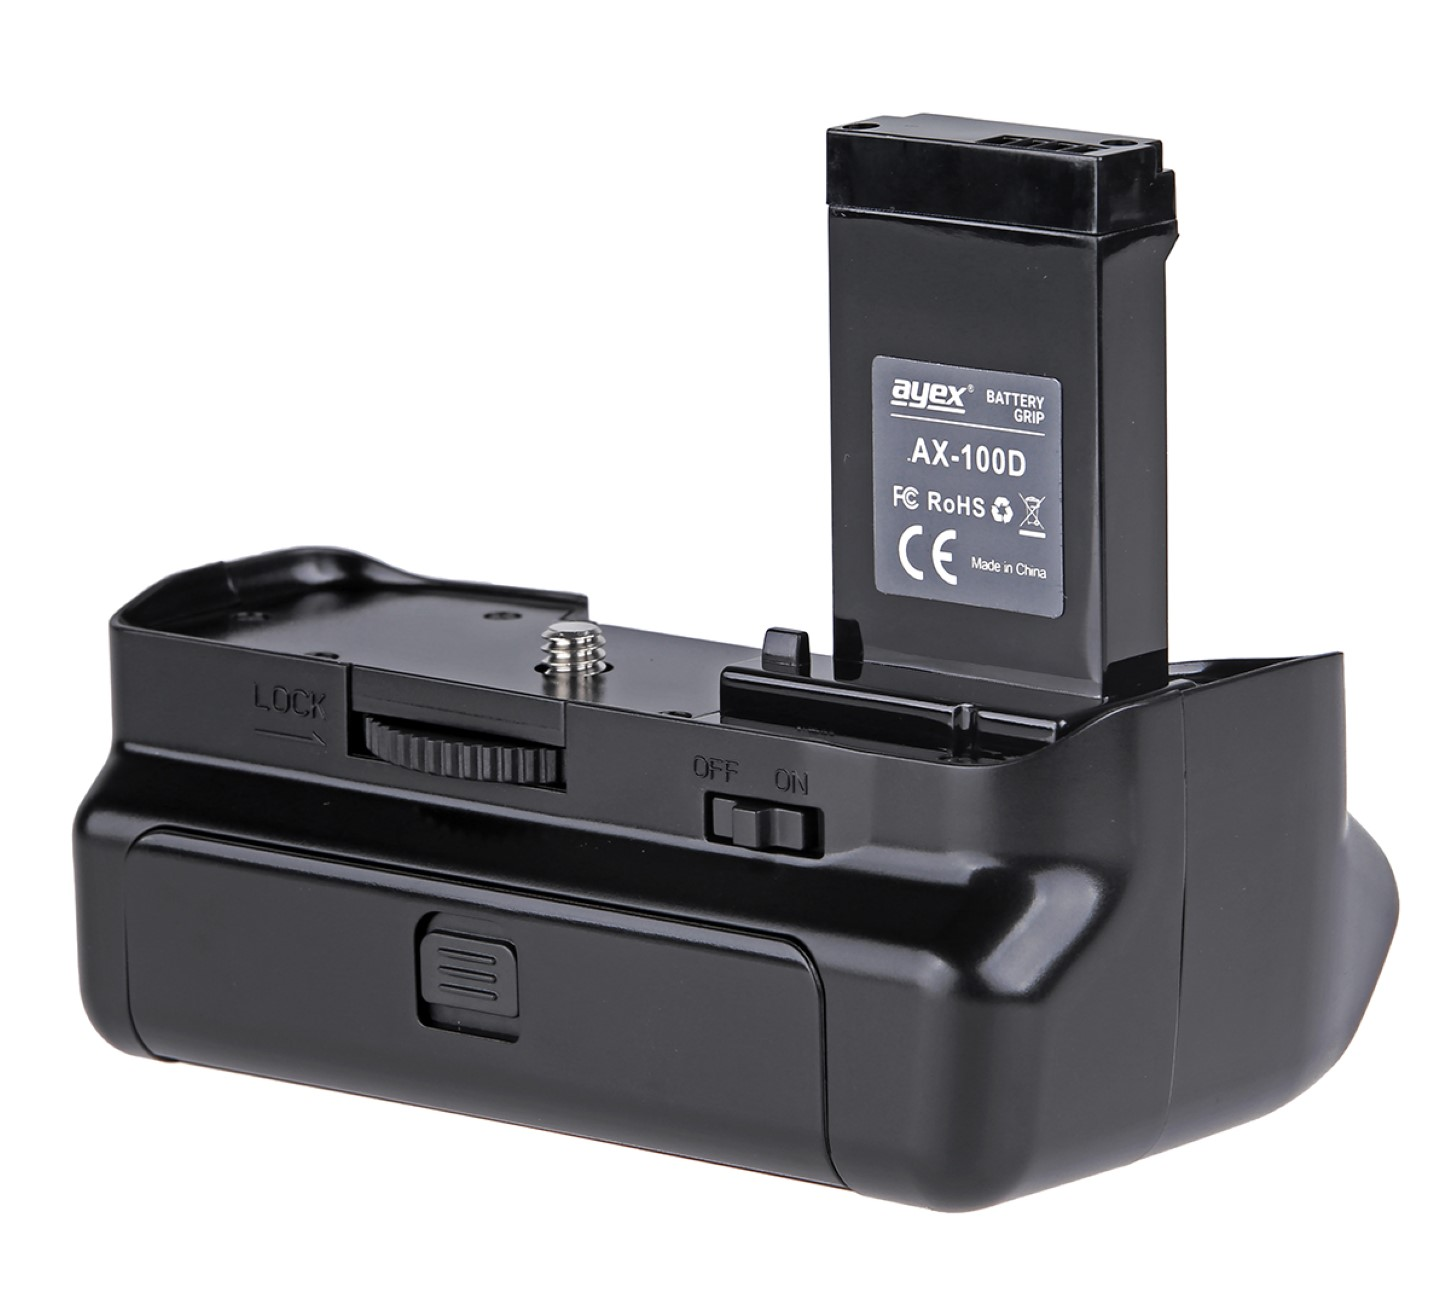 Ladegerät, Set + für 2x 100D 1x Batteriegriff LP-E12 + Canon Batteriegriff-Set, Akku + Dual IR-Fernauslöser Black USB EOS AYEX